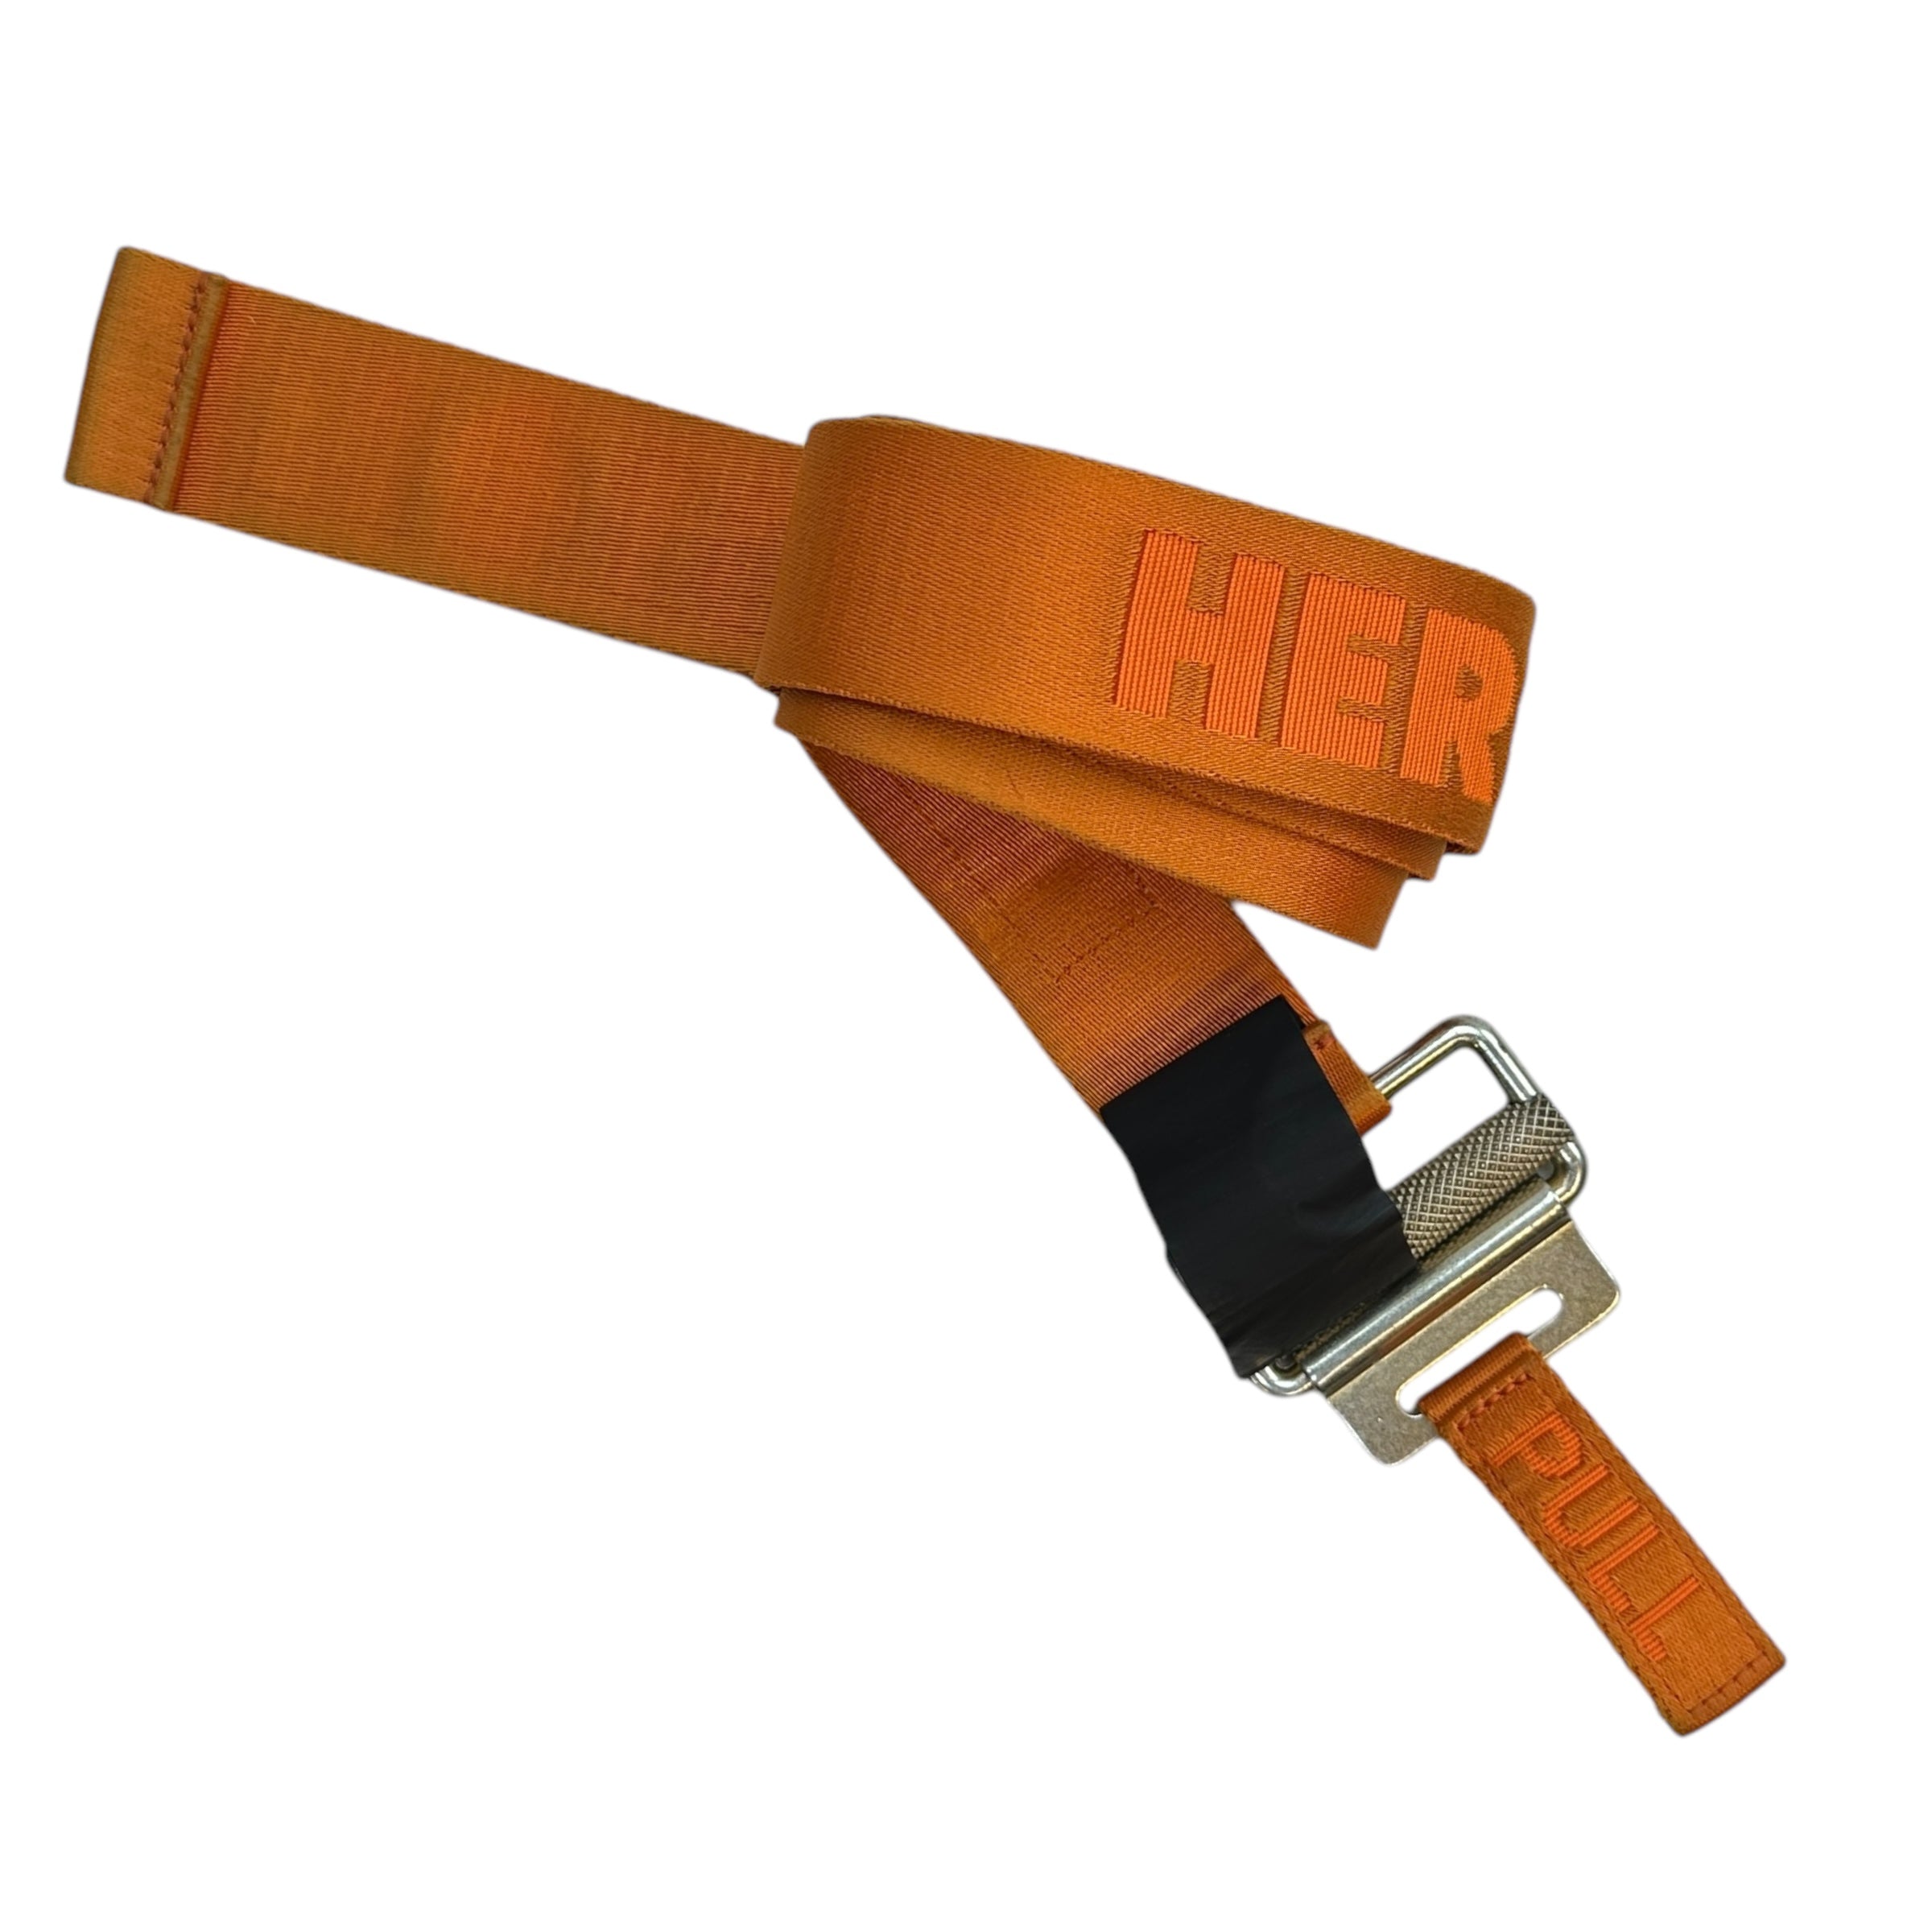 Heron Preston Tape Logo Belt Orange/Gold